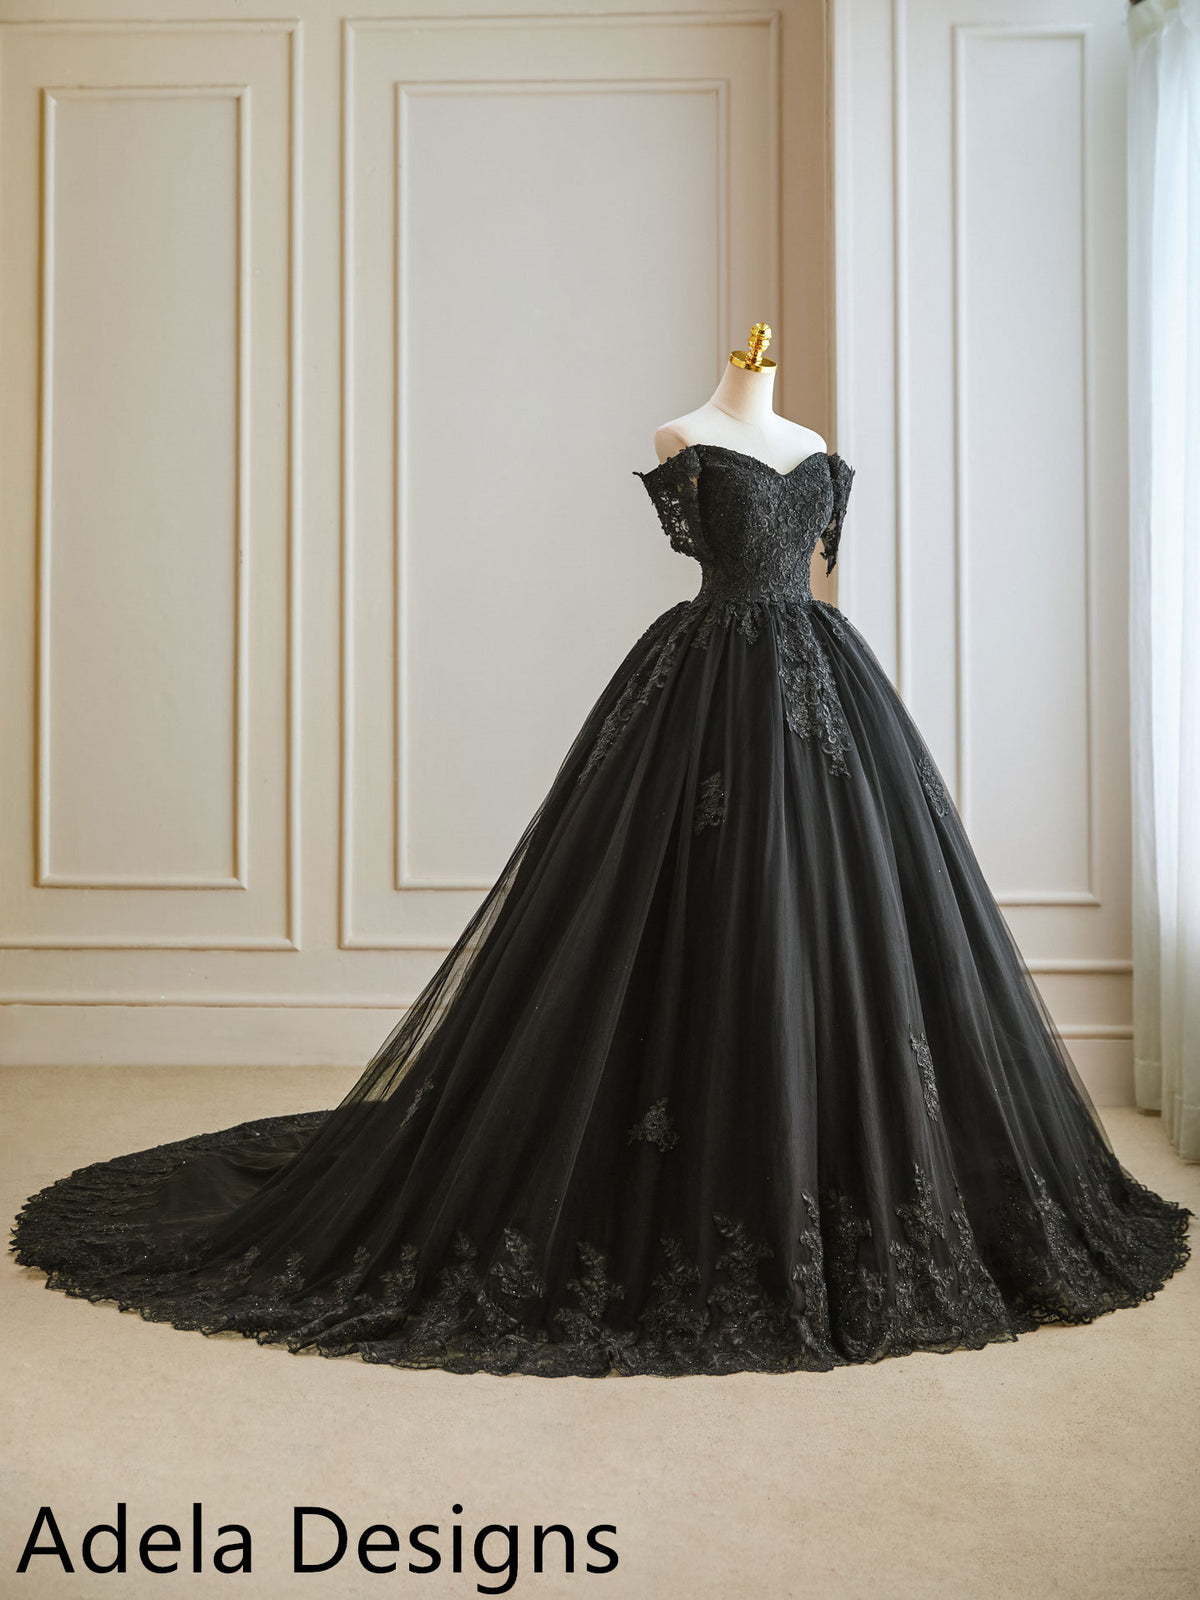 Gothic Black Ball Bridal Gown Wedding Dress Off The Shoulder Ball Gown Lace Train Unique Design Goth Bride Size 4